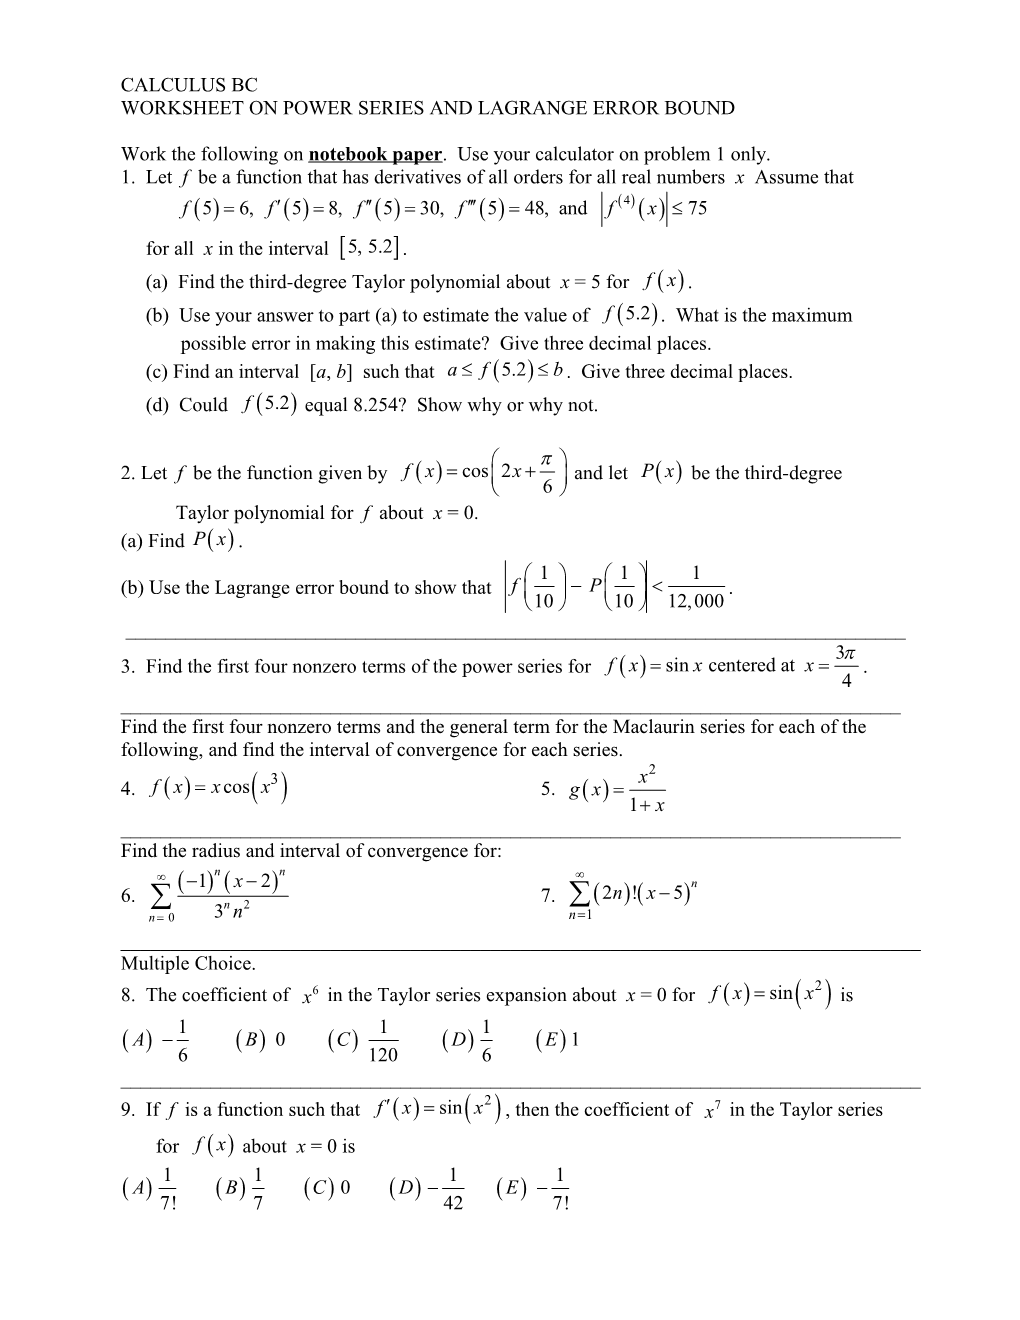 Worksheet on Power Series and Lagrange Error Bound